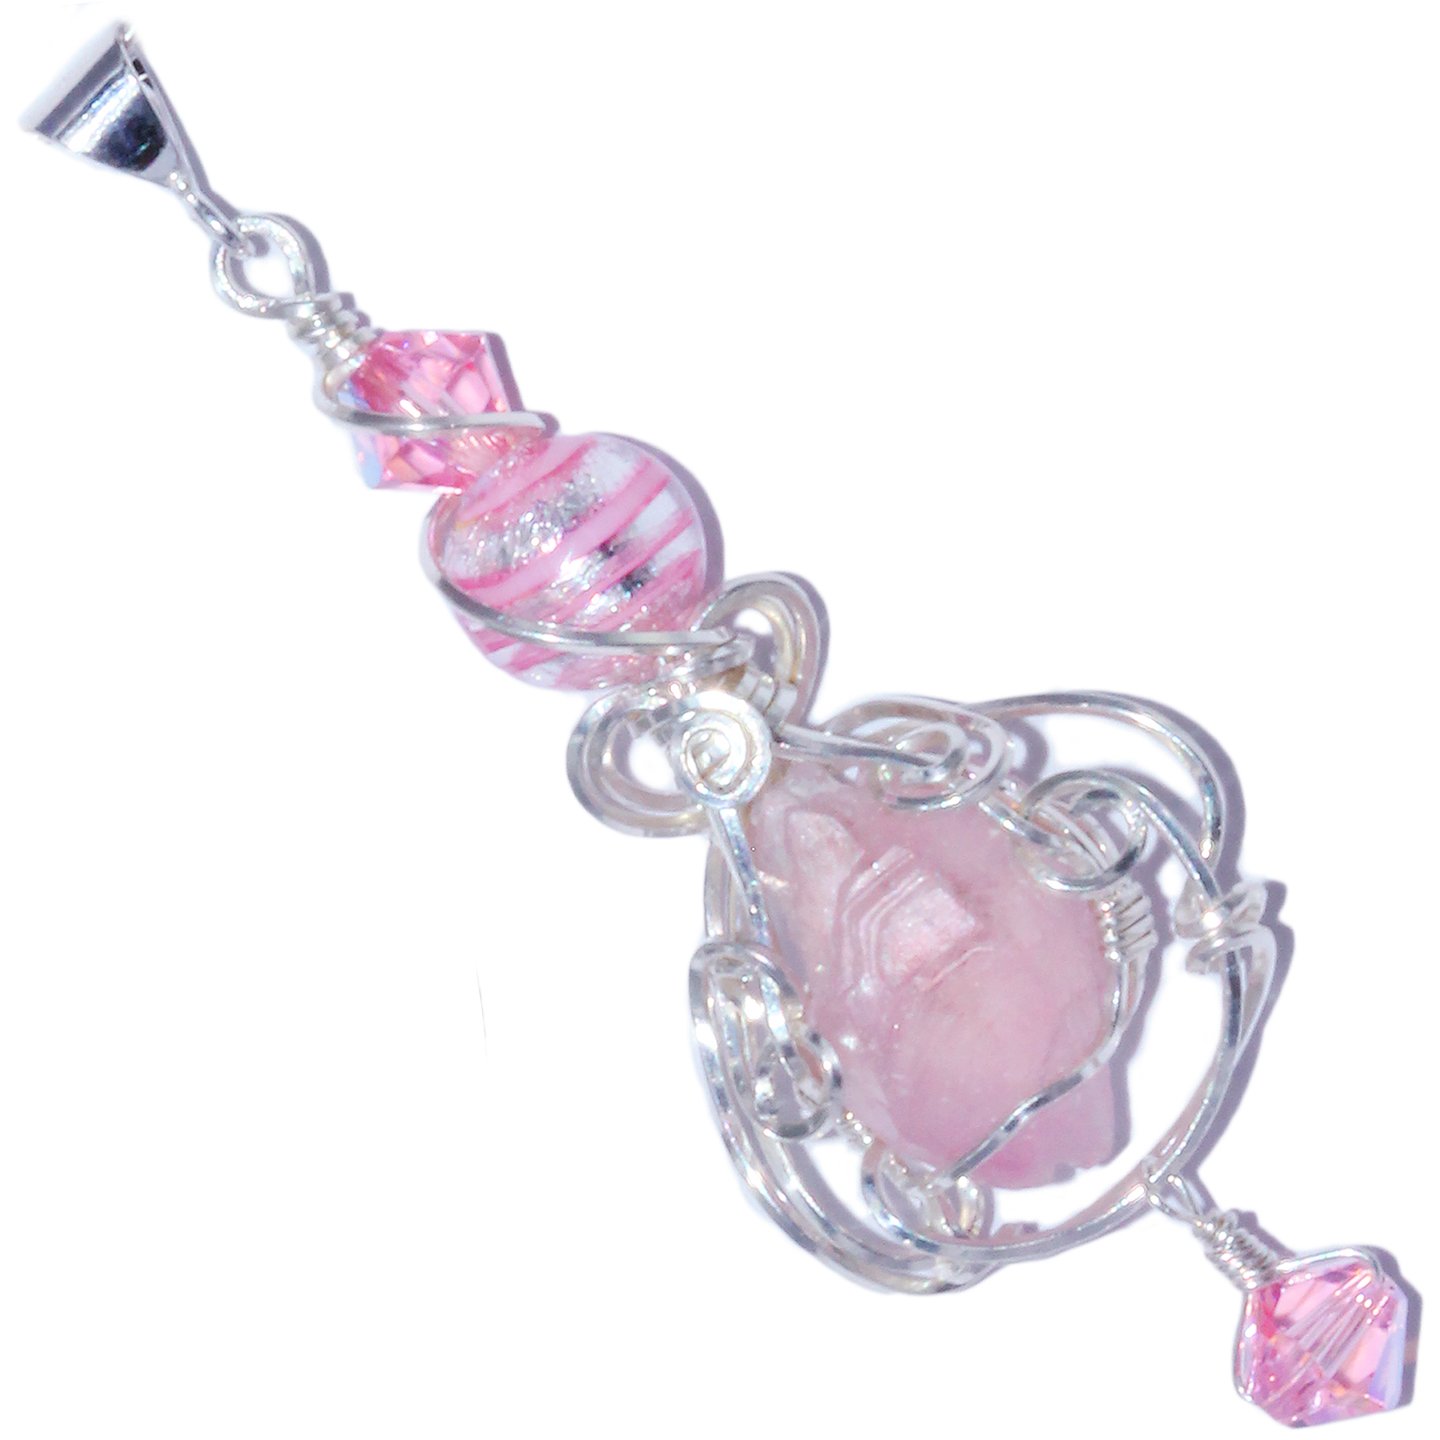 rose quartz crystal pendant necklace